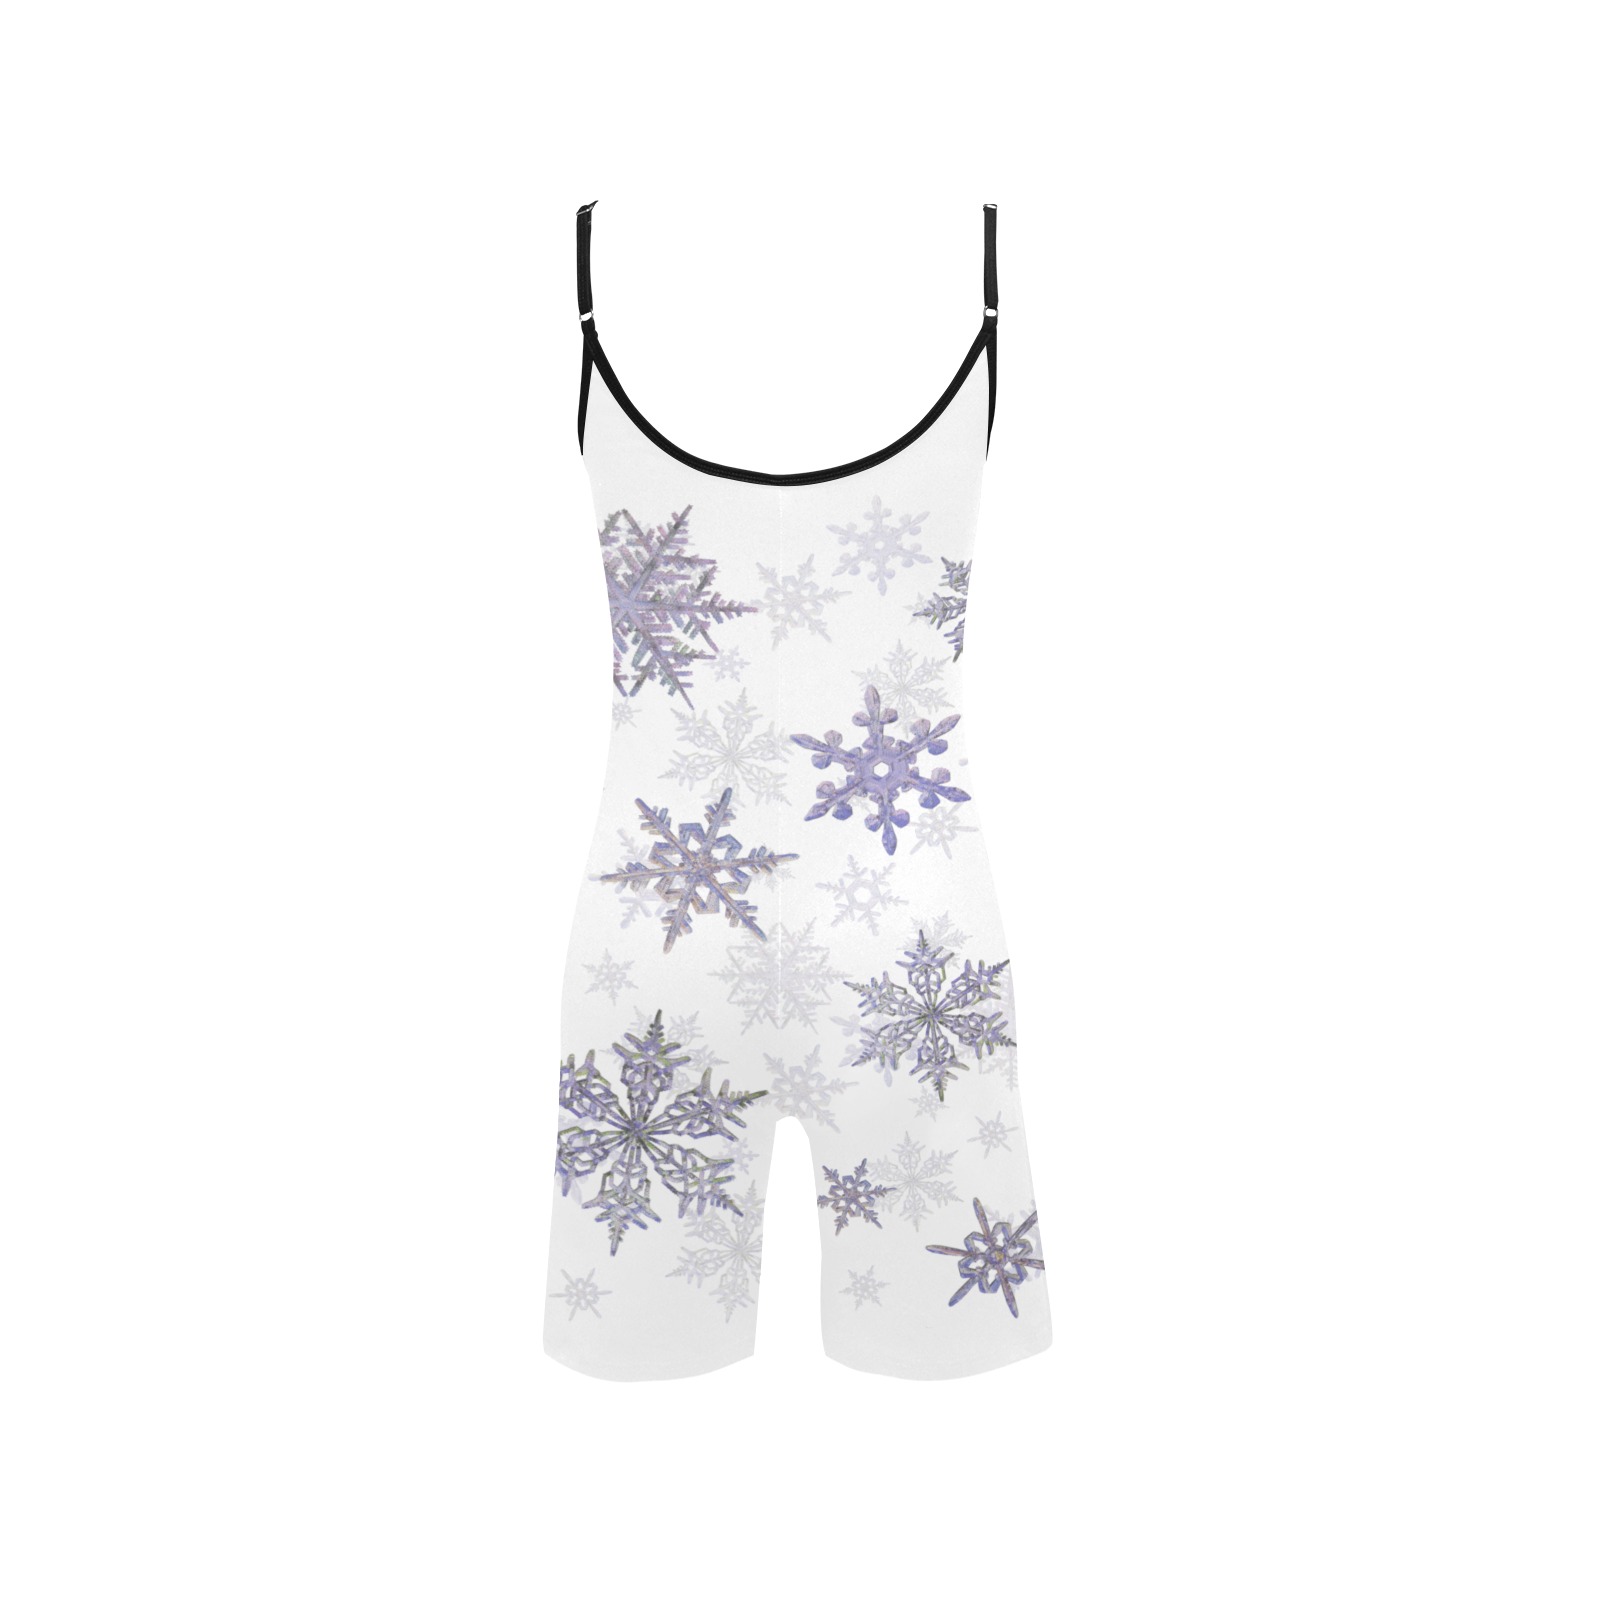 Snowflakes Winter Christmas time pattern Women's Short Yoga Bodysuit